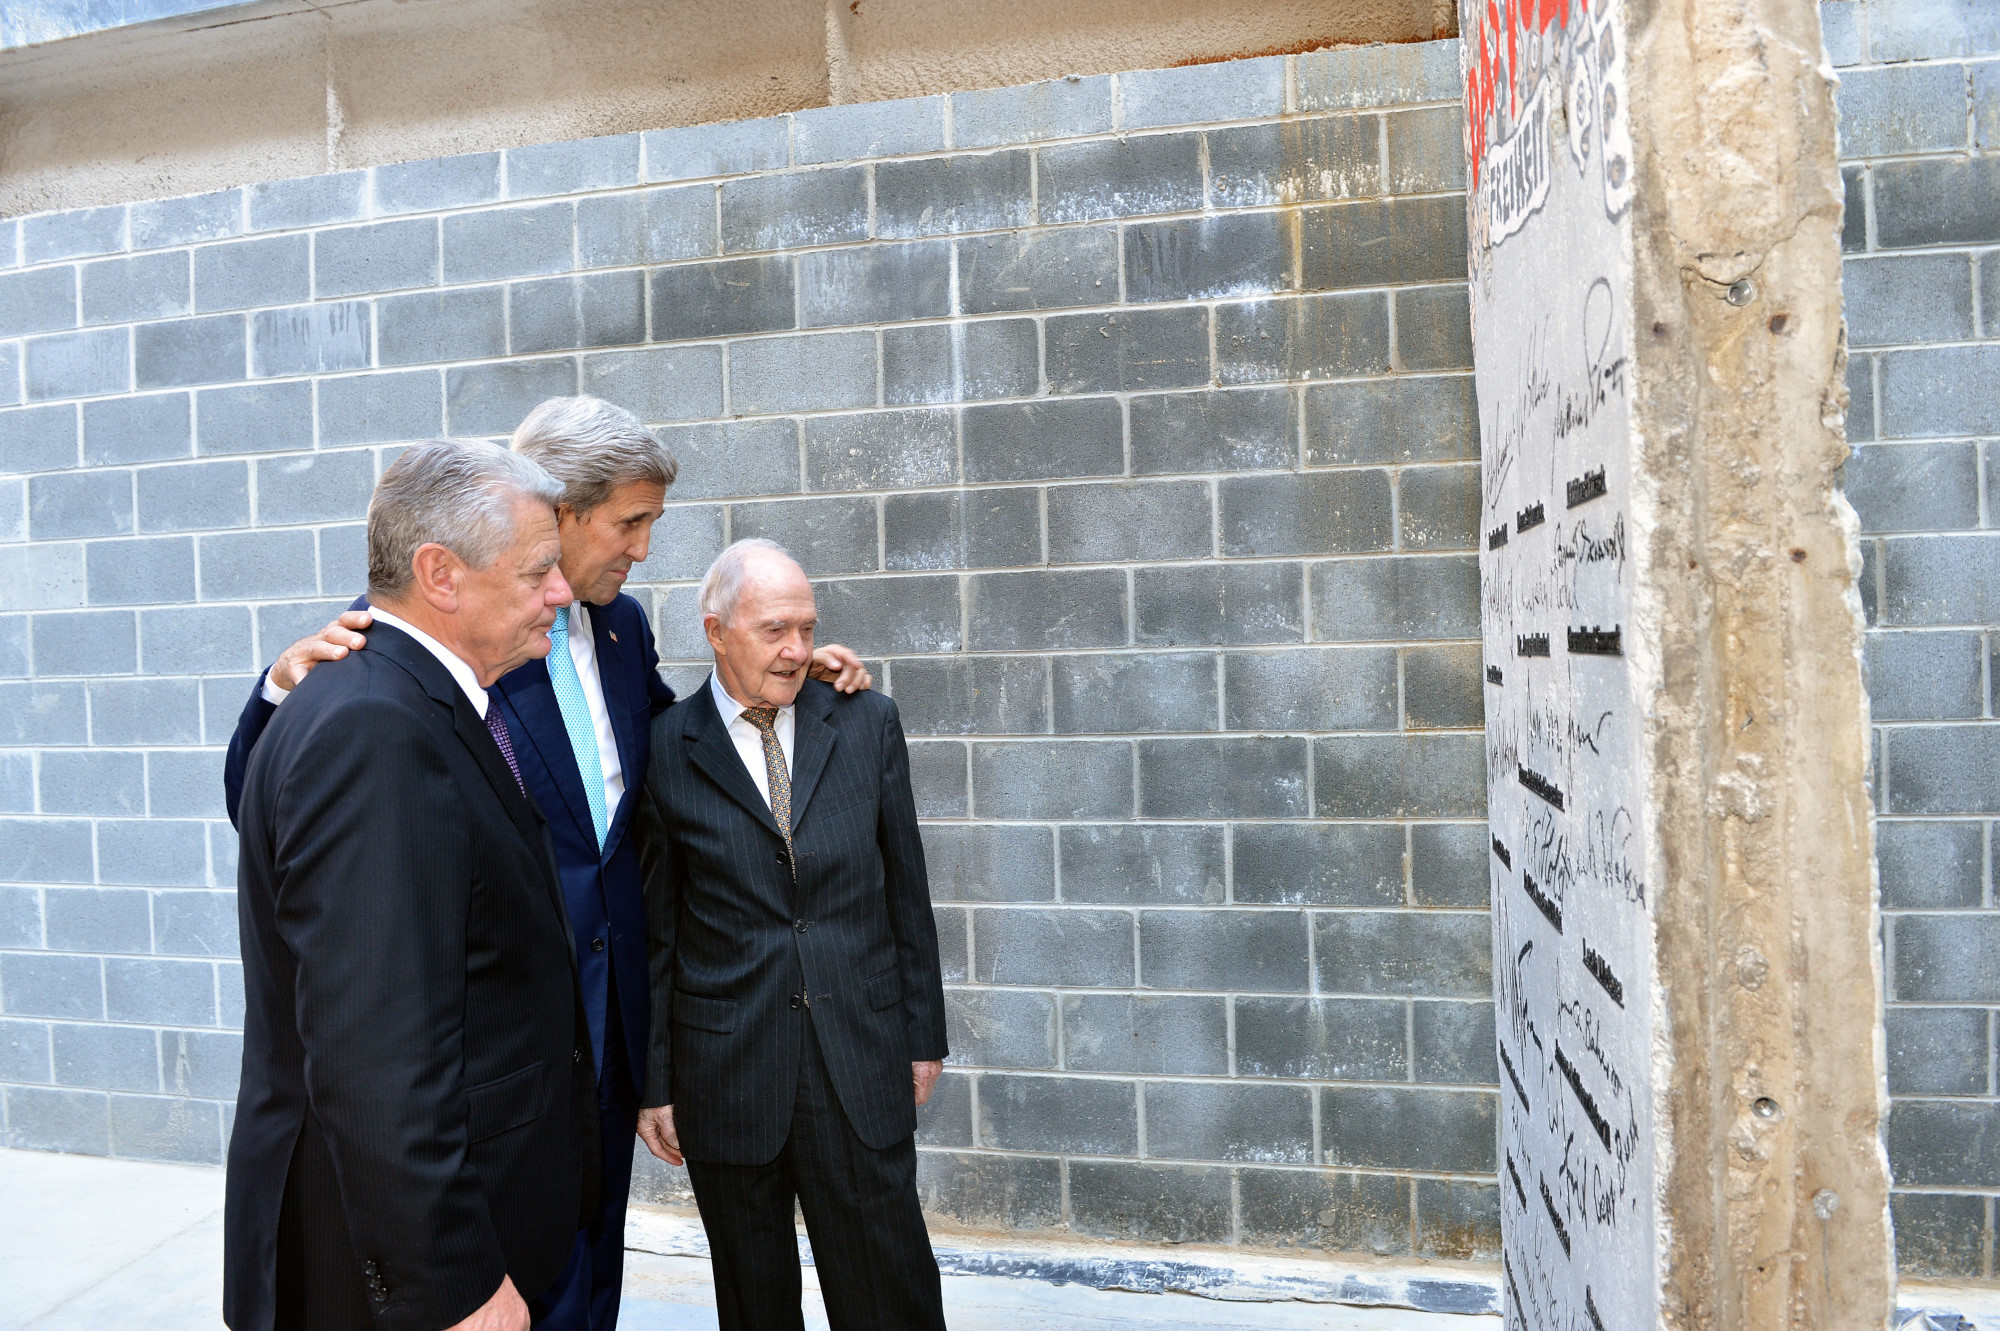 Berlin Wall, Diplomacy Center, pavilion, Secretary Kerry